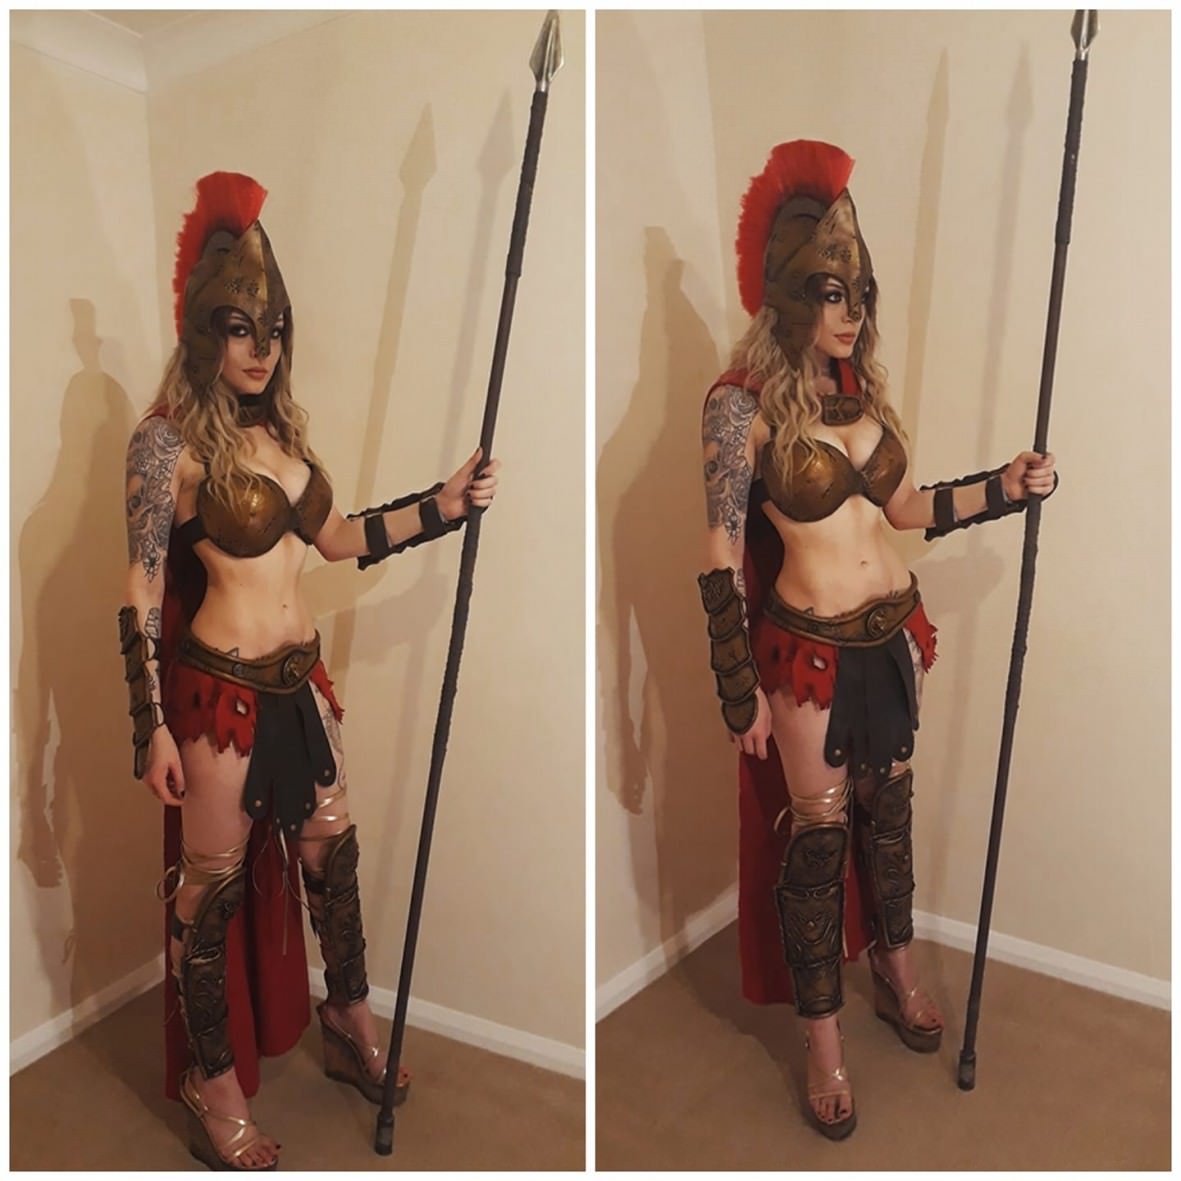  Onyxeia as a female Spartan warrior